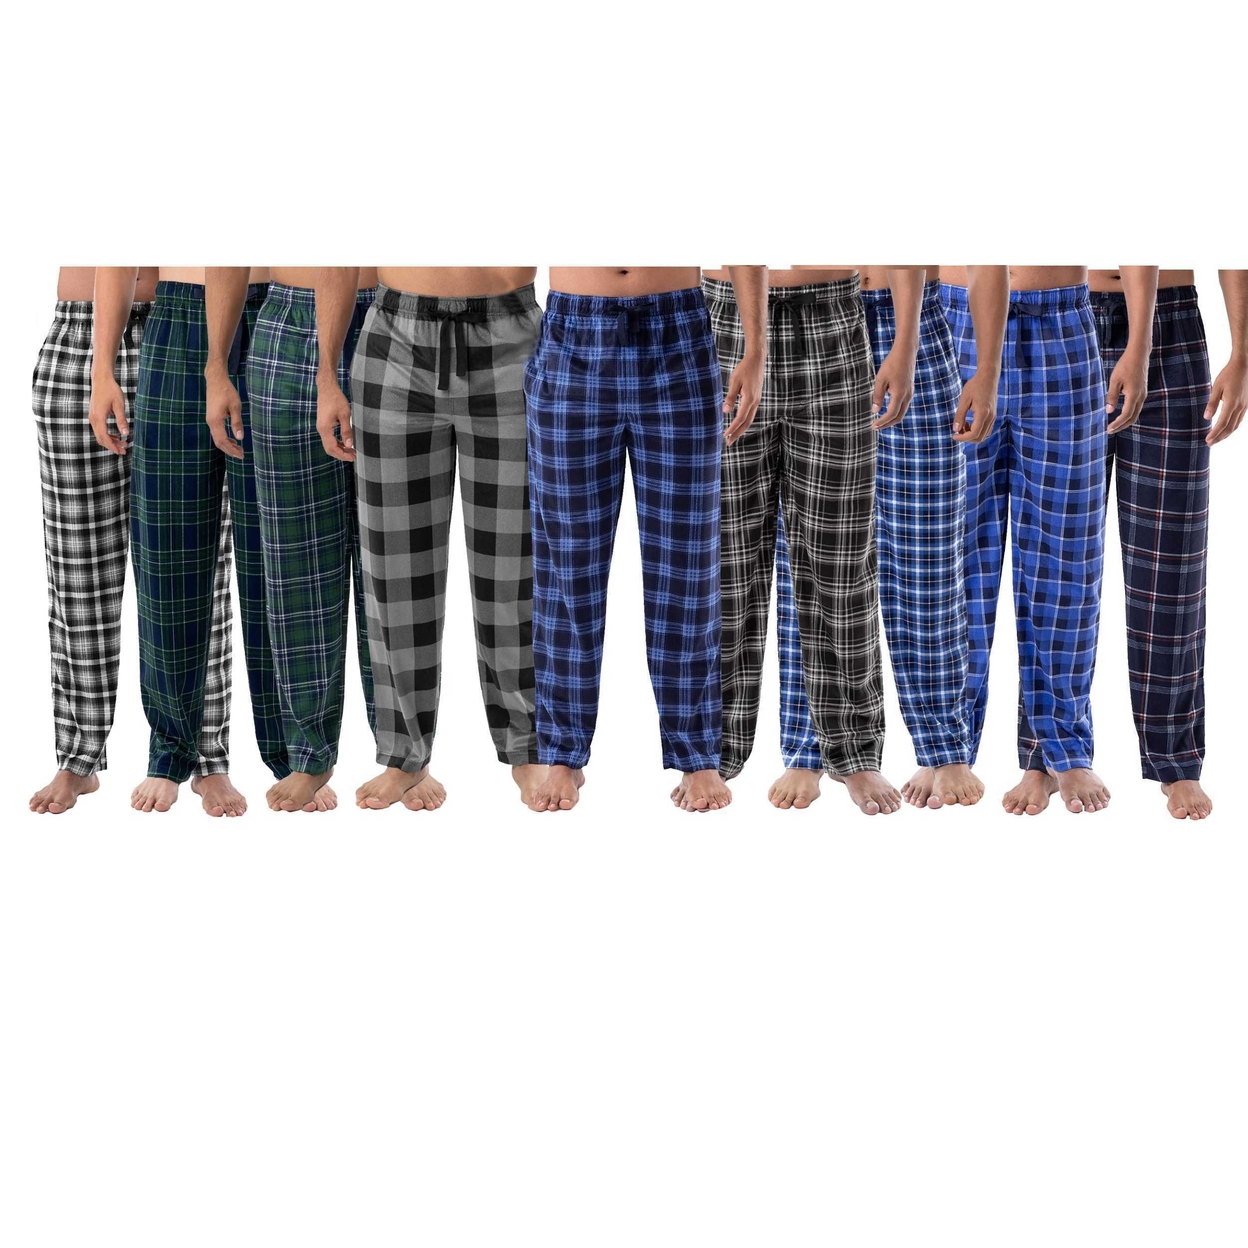 3-Pack: Men's Ultra-Soft Cozy Lounge Sleep Micro Fleece Plaid Pajama Pants - Large